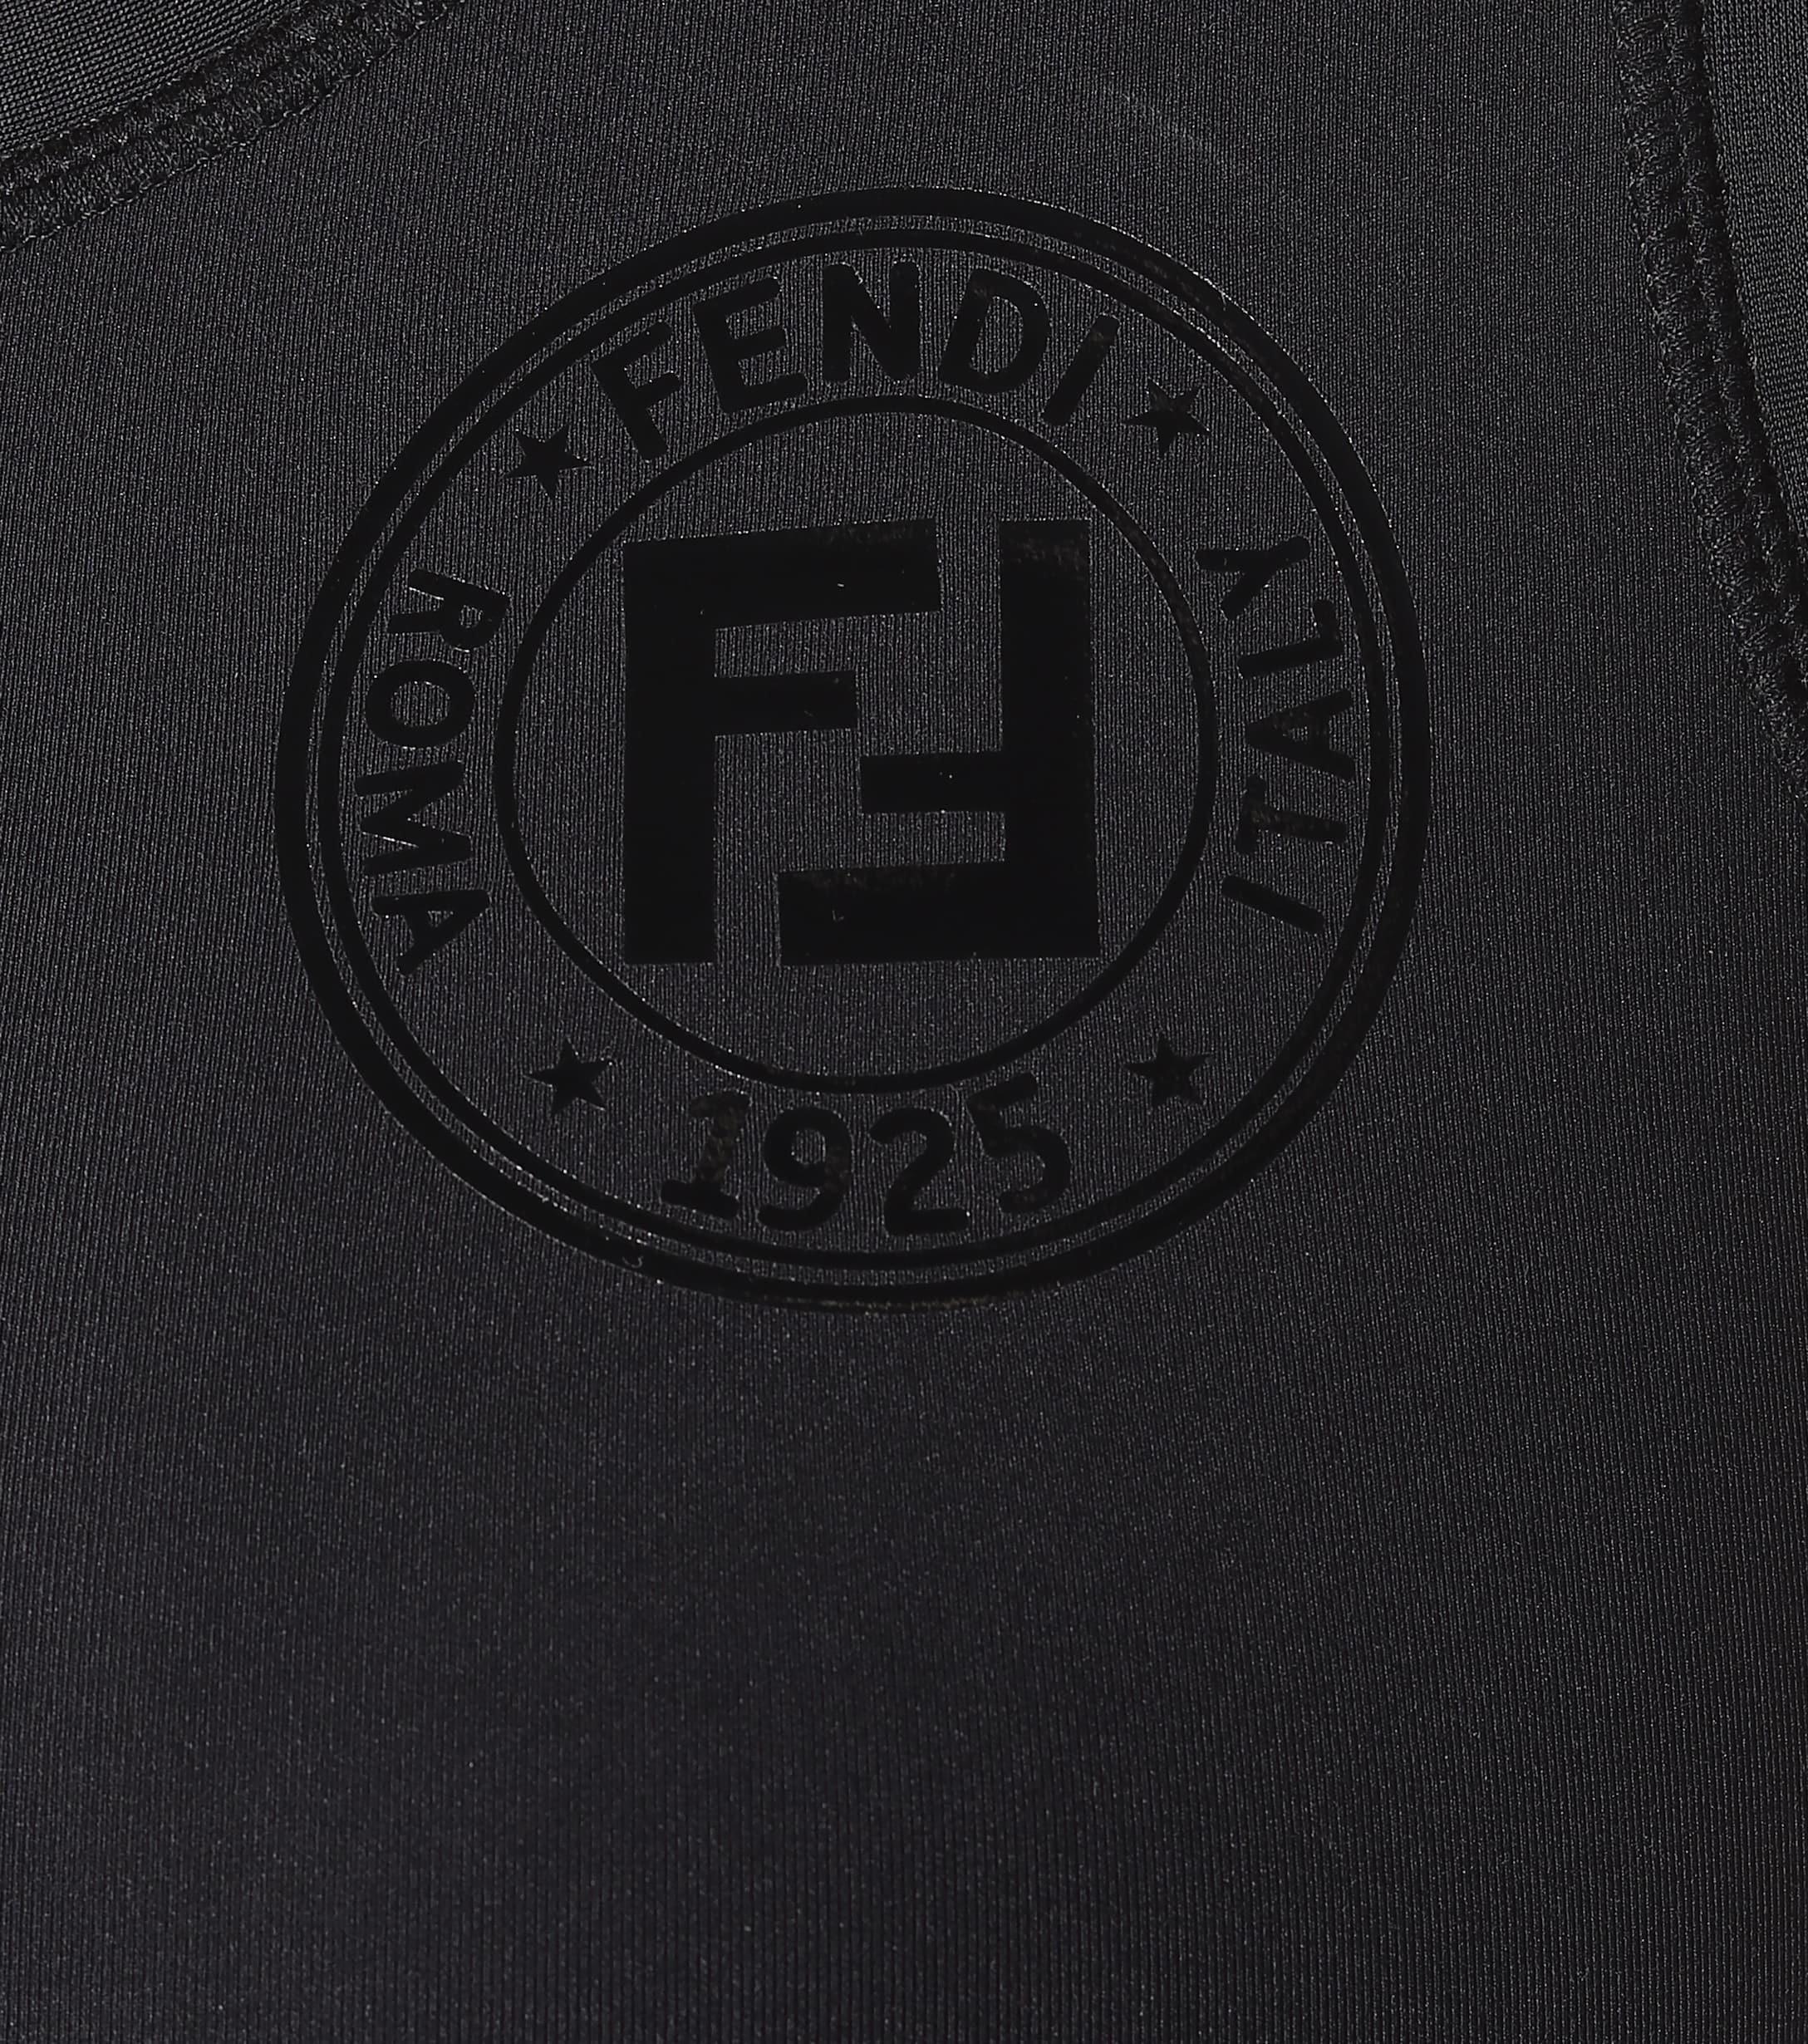 Fendi Logo Crop Top in Black - Lyst